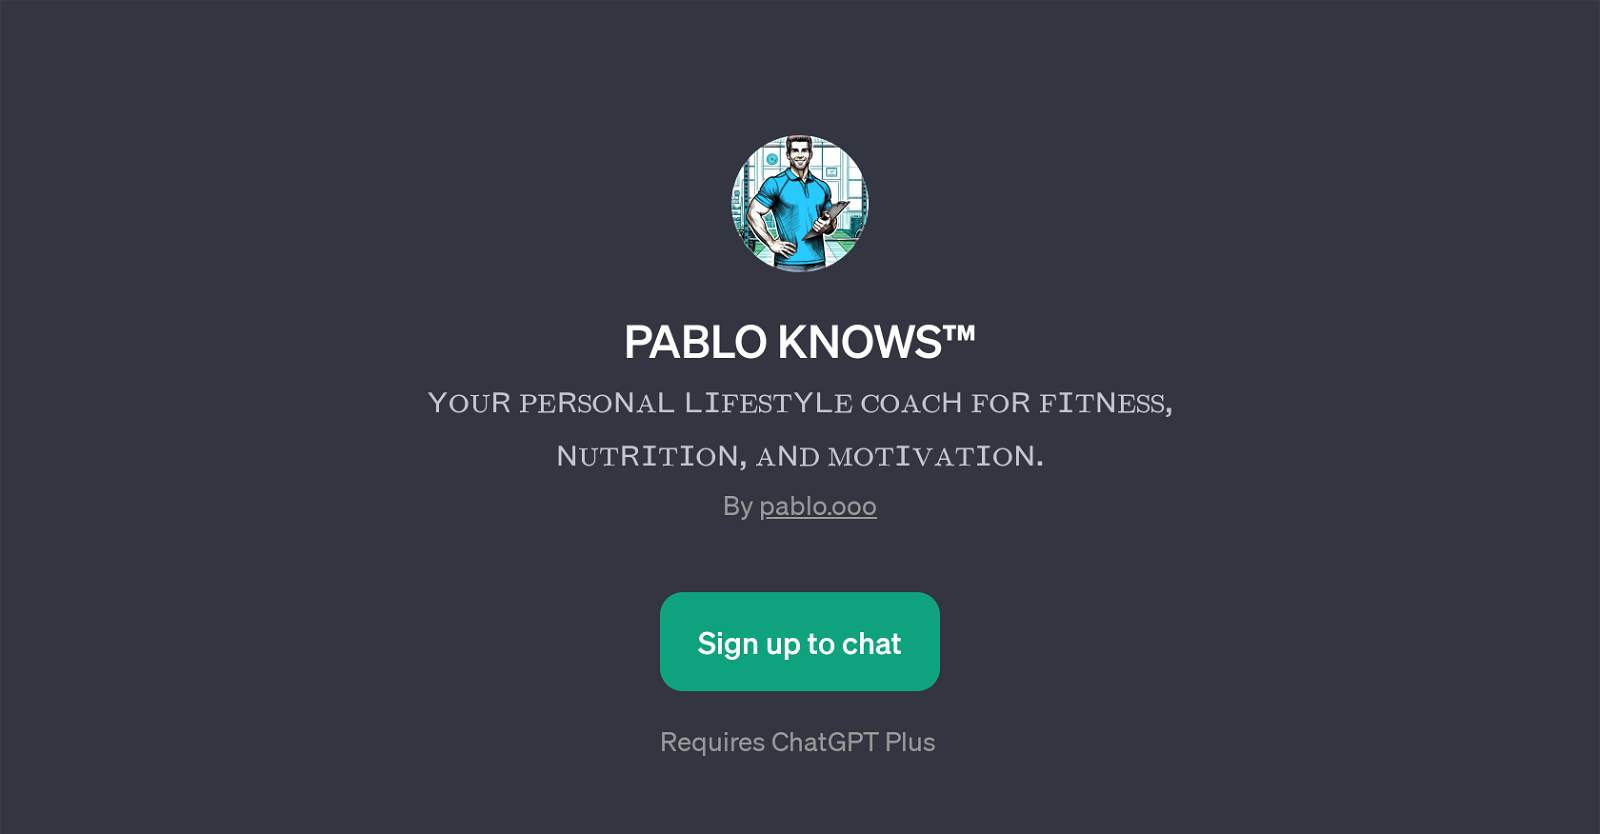 Pablo Knows website